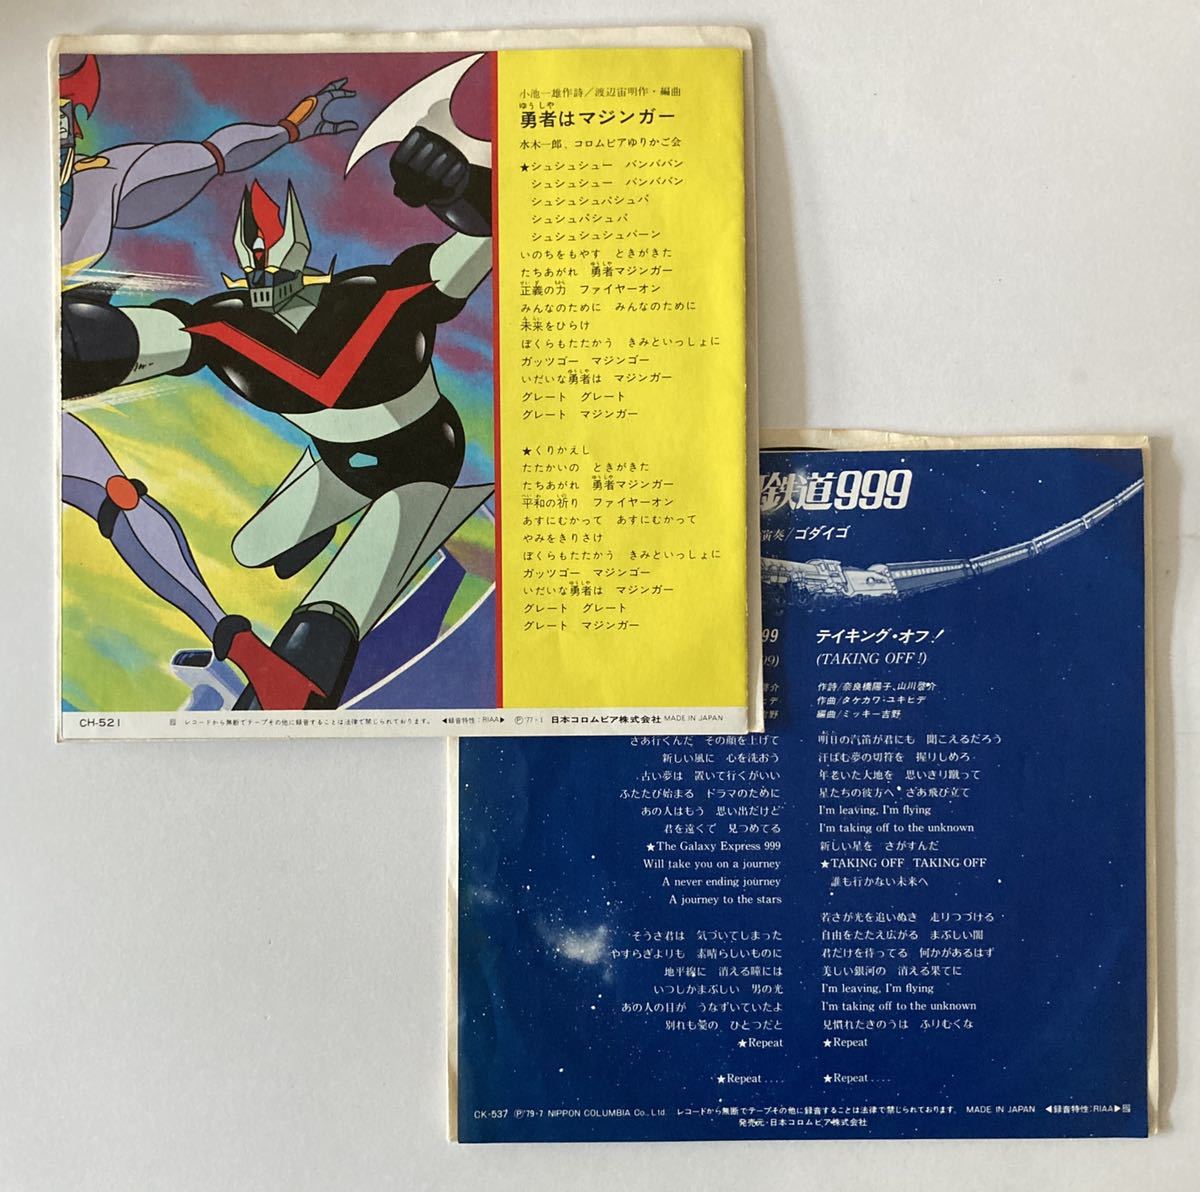 EP 4 шт. комплект запись аниме Mobile Suit Gundam TV(H)57 супер человек Squadron роза tuck SCS-363 Mazinger z CH-521 Ginga Tetsudou 999 CK-537 7 дюймовый 